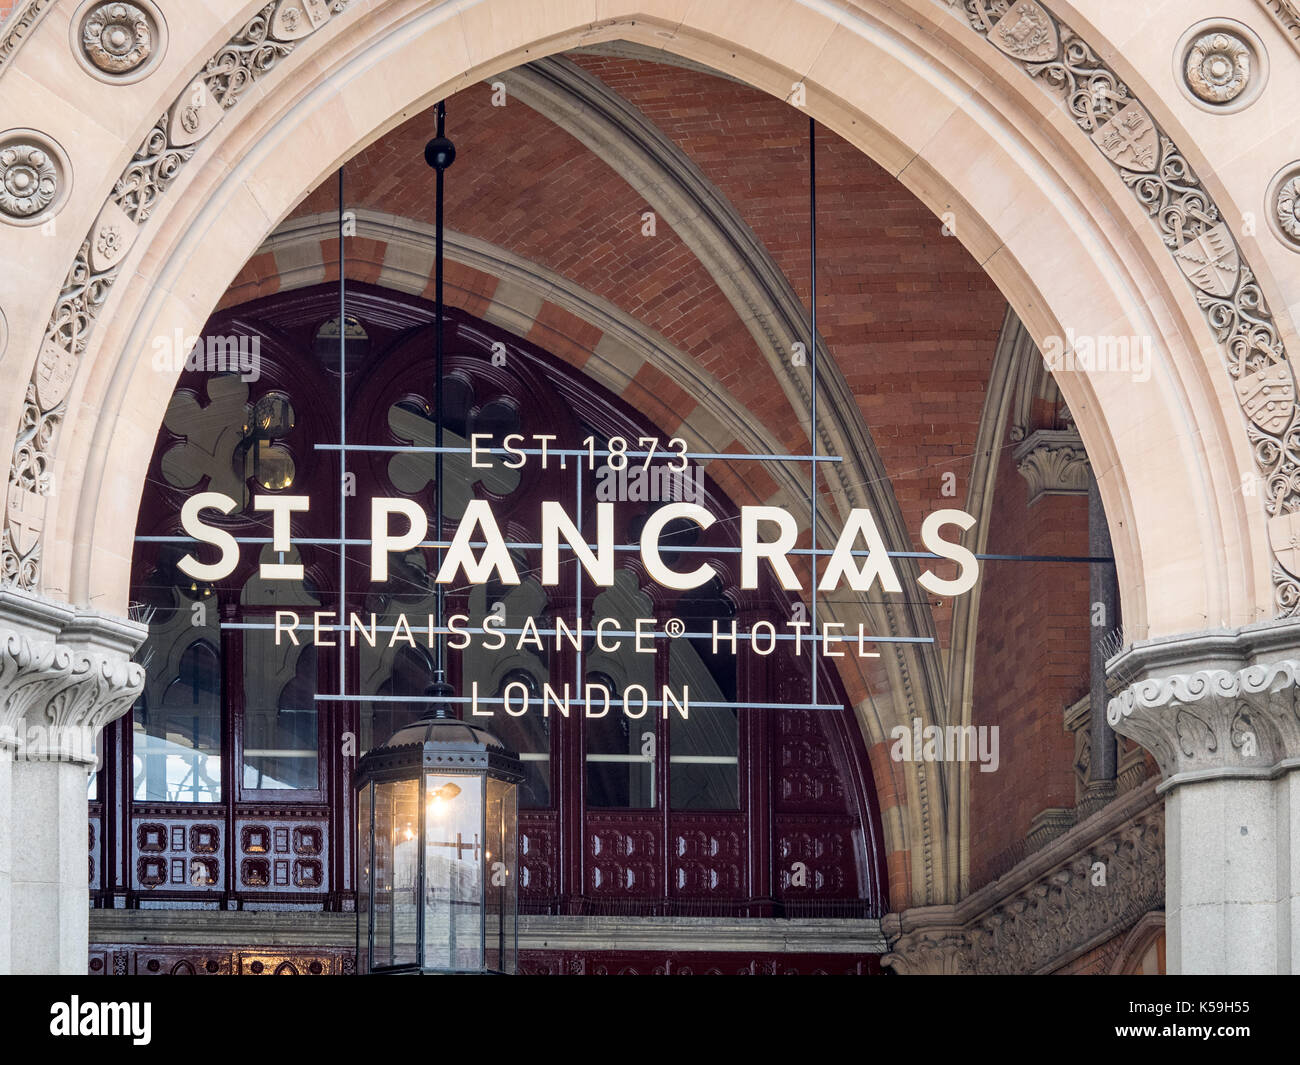 St Pancras Hotel Londra - Ingresso al St Pancras Renaissance Hotel formerly The Midland Grand Hotel progettato da George Gilbert Scott, aperto 1873. Foto Stock